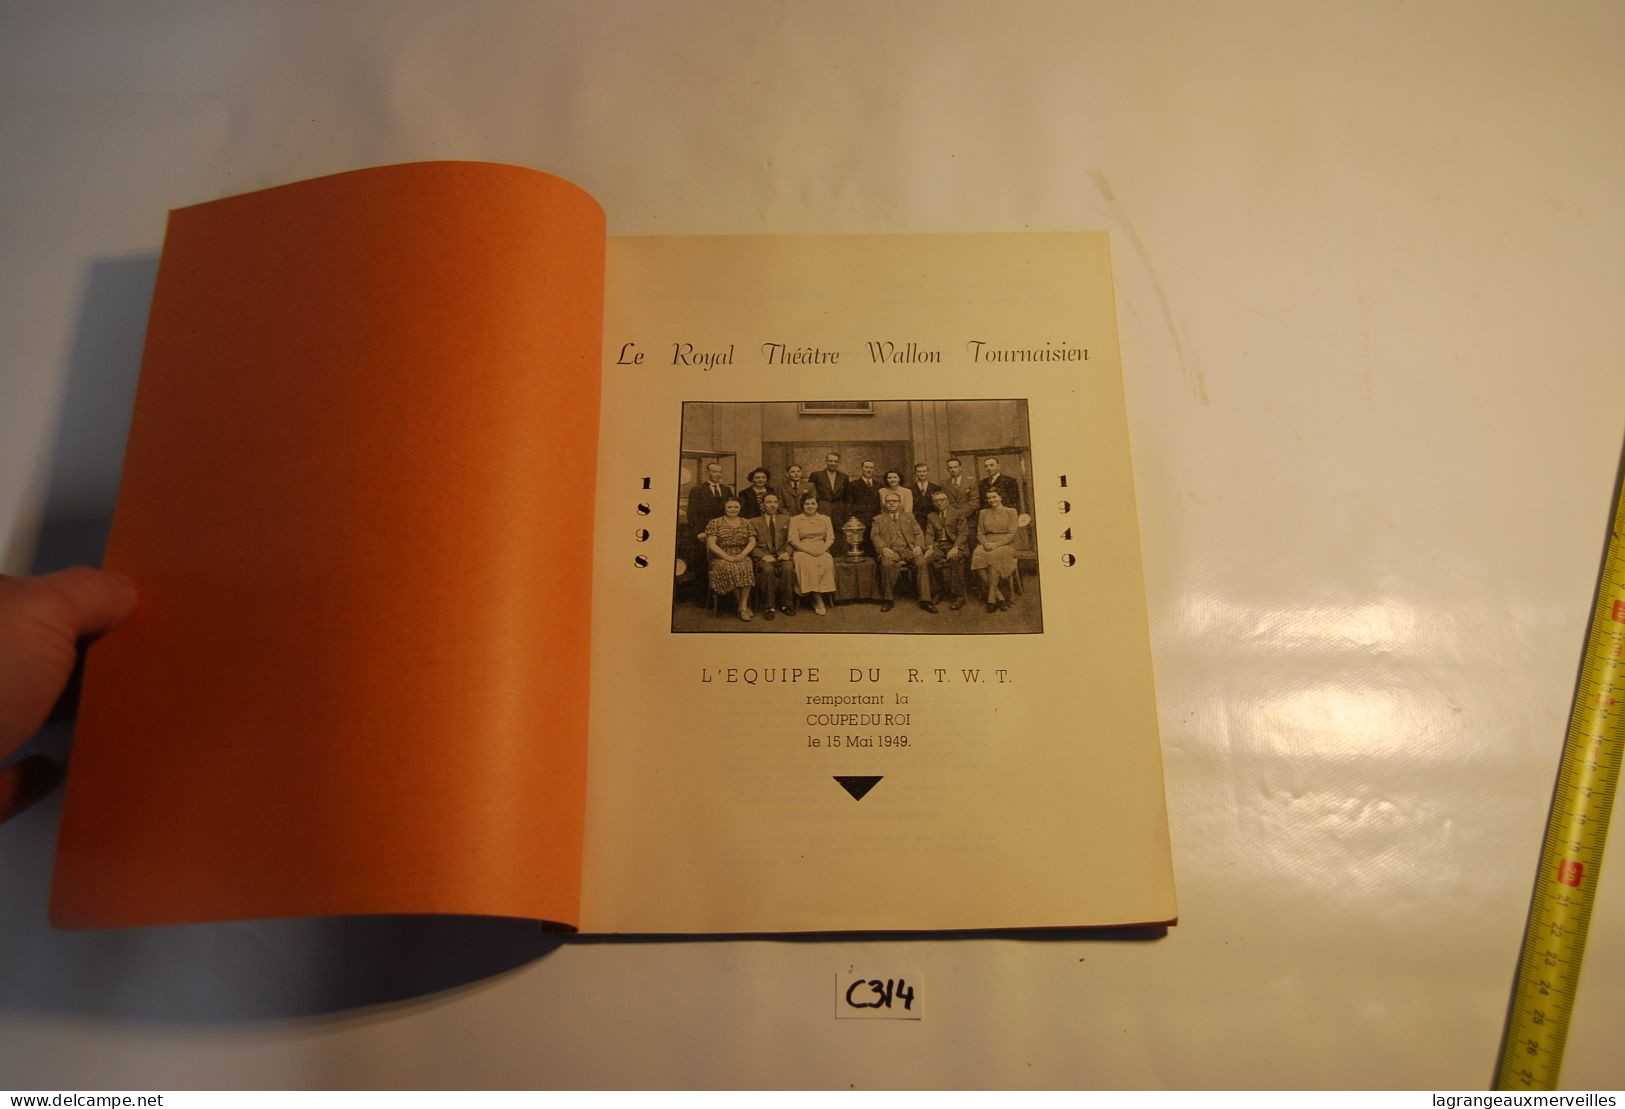 C314 Livret - Les Trois Grands - Edgard Hespel - Tournai - 1949 - Rare Book - French Authors